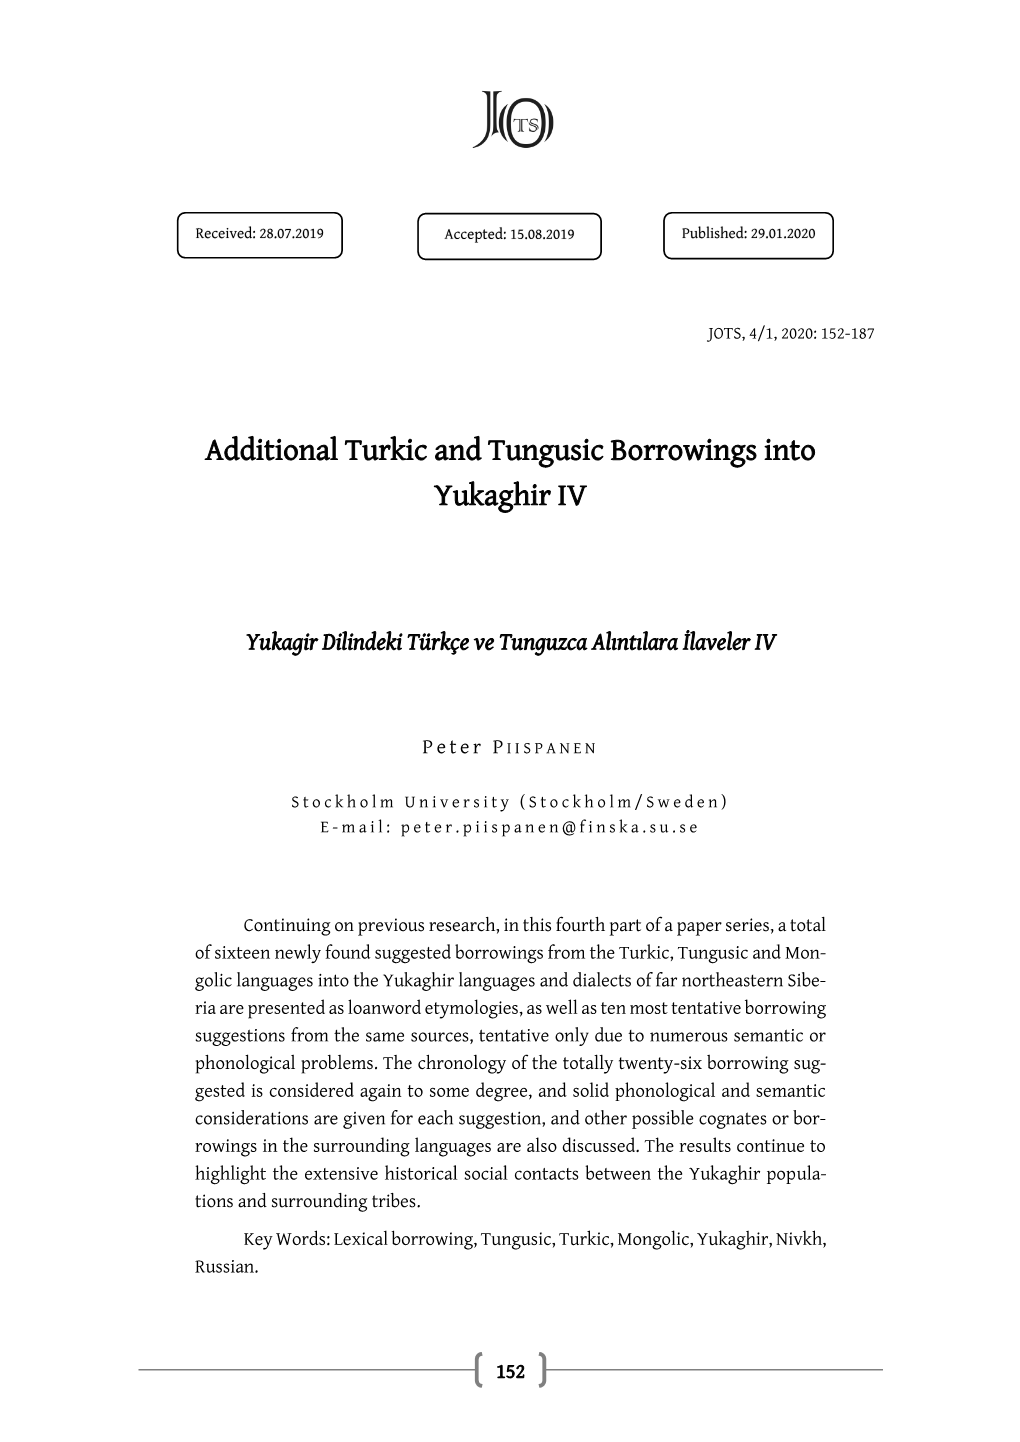 Additional Turkic and Tungusic Borrowings Into Yukaghir IV